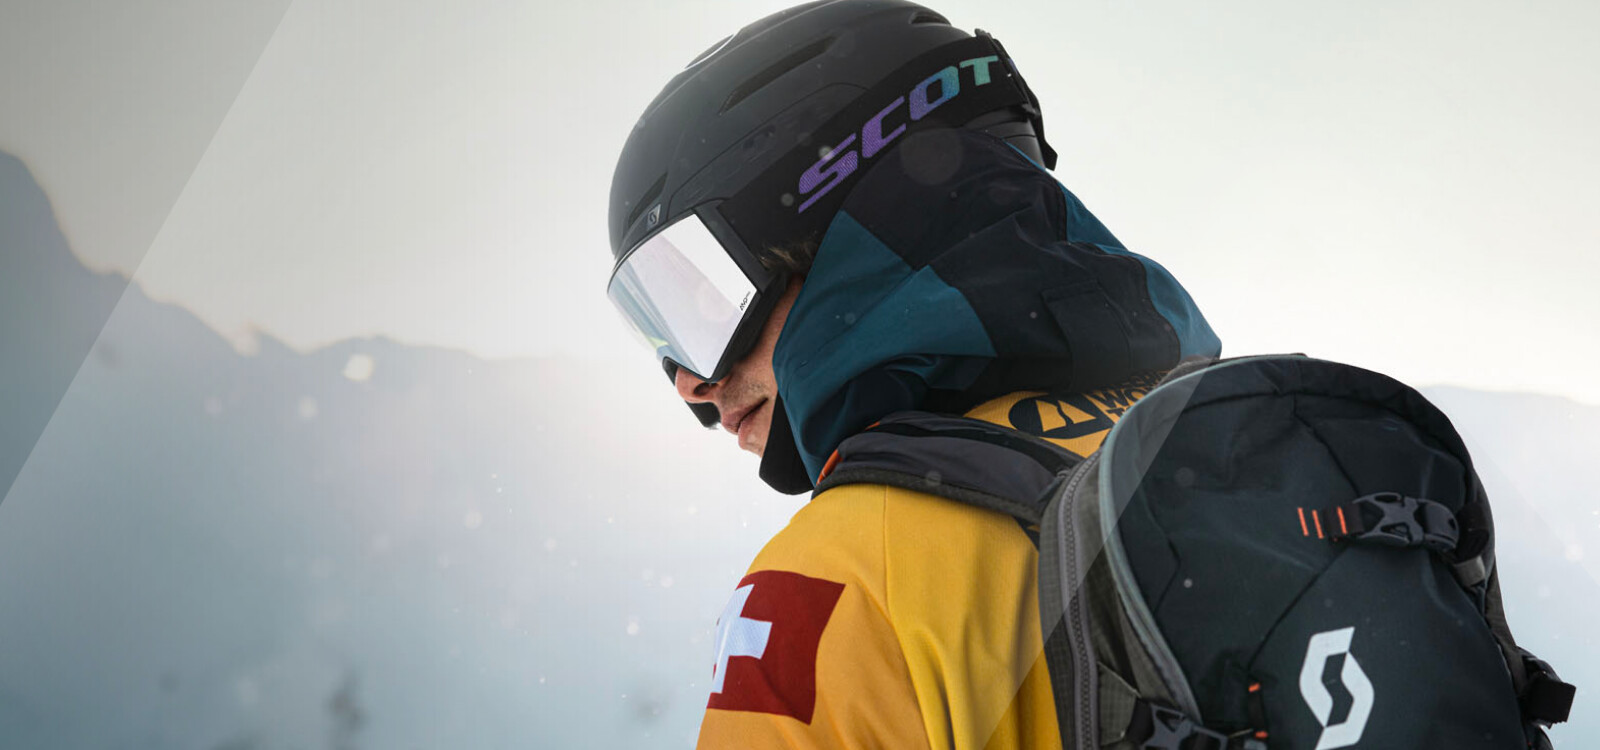 SCOTT Shield LS - ValetMont - SnowUniverse, équipement outdoor et skis